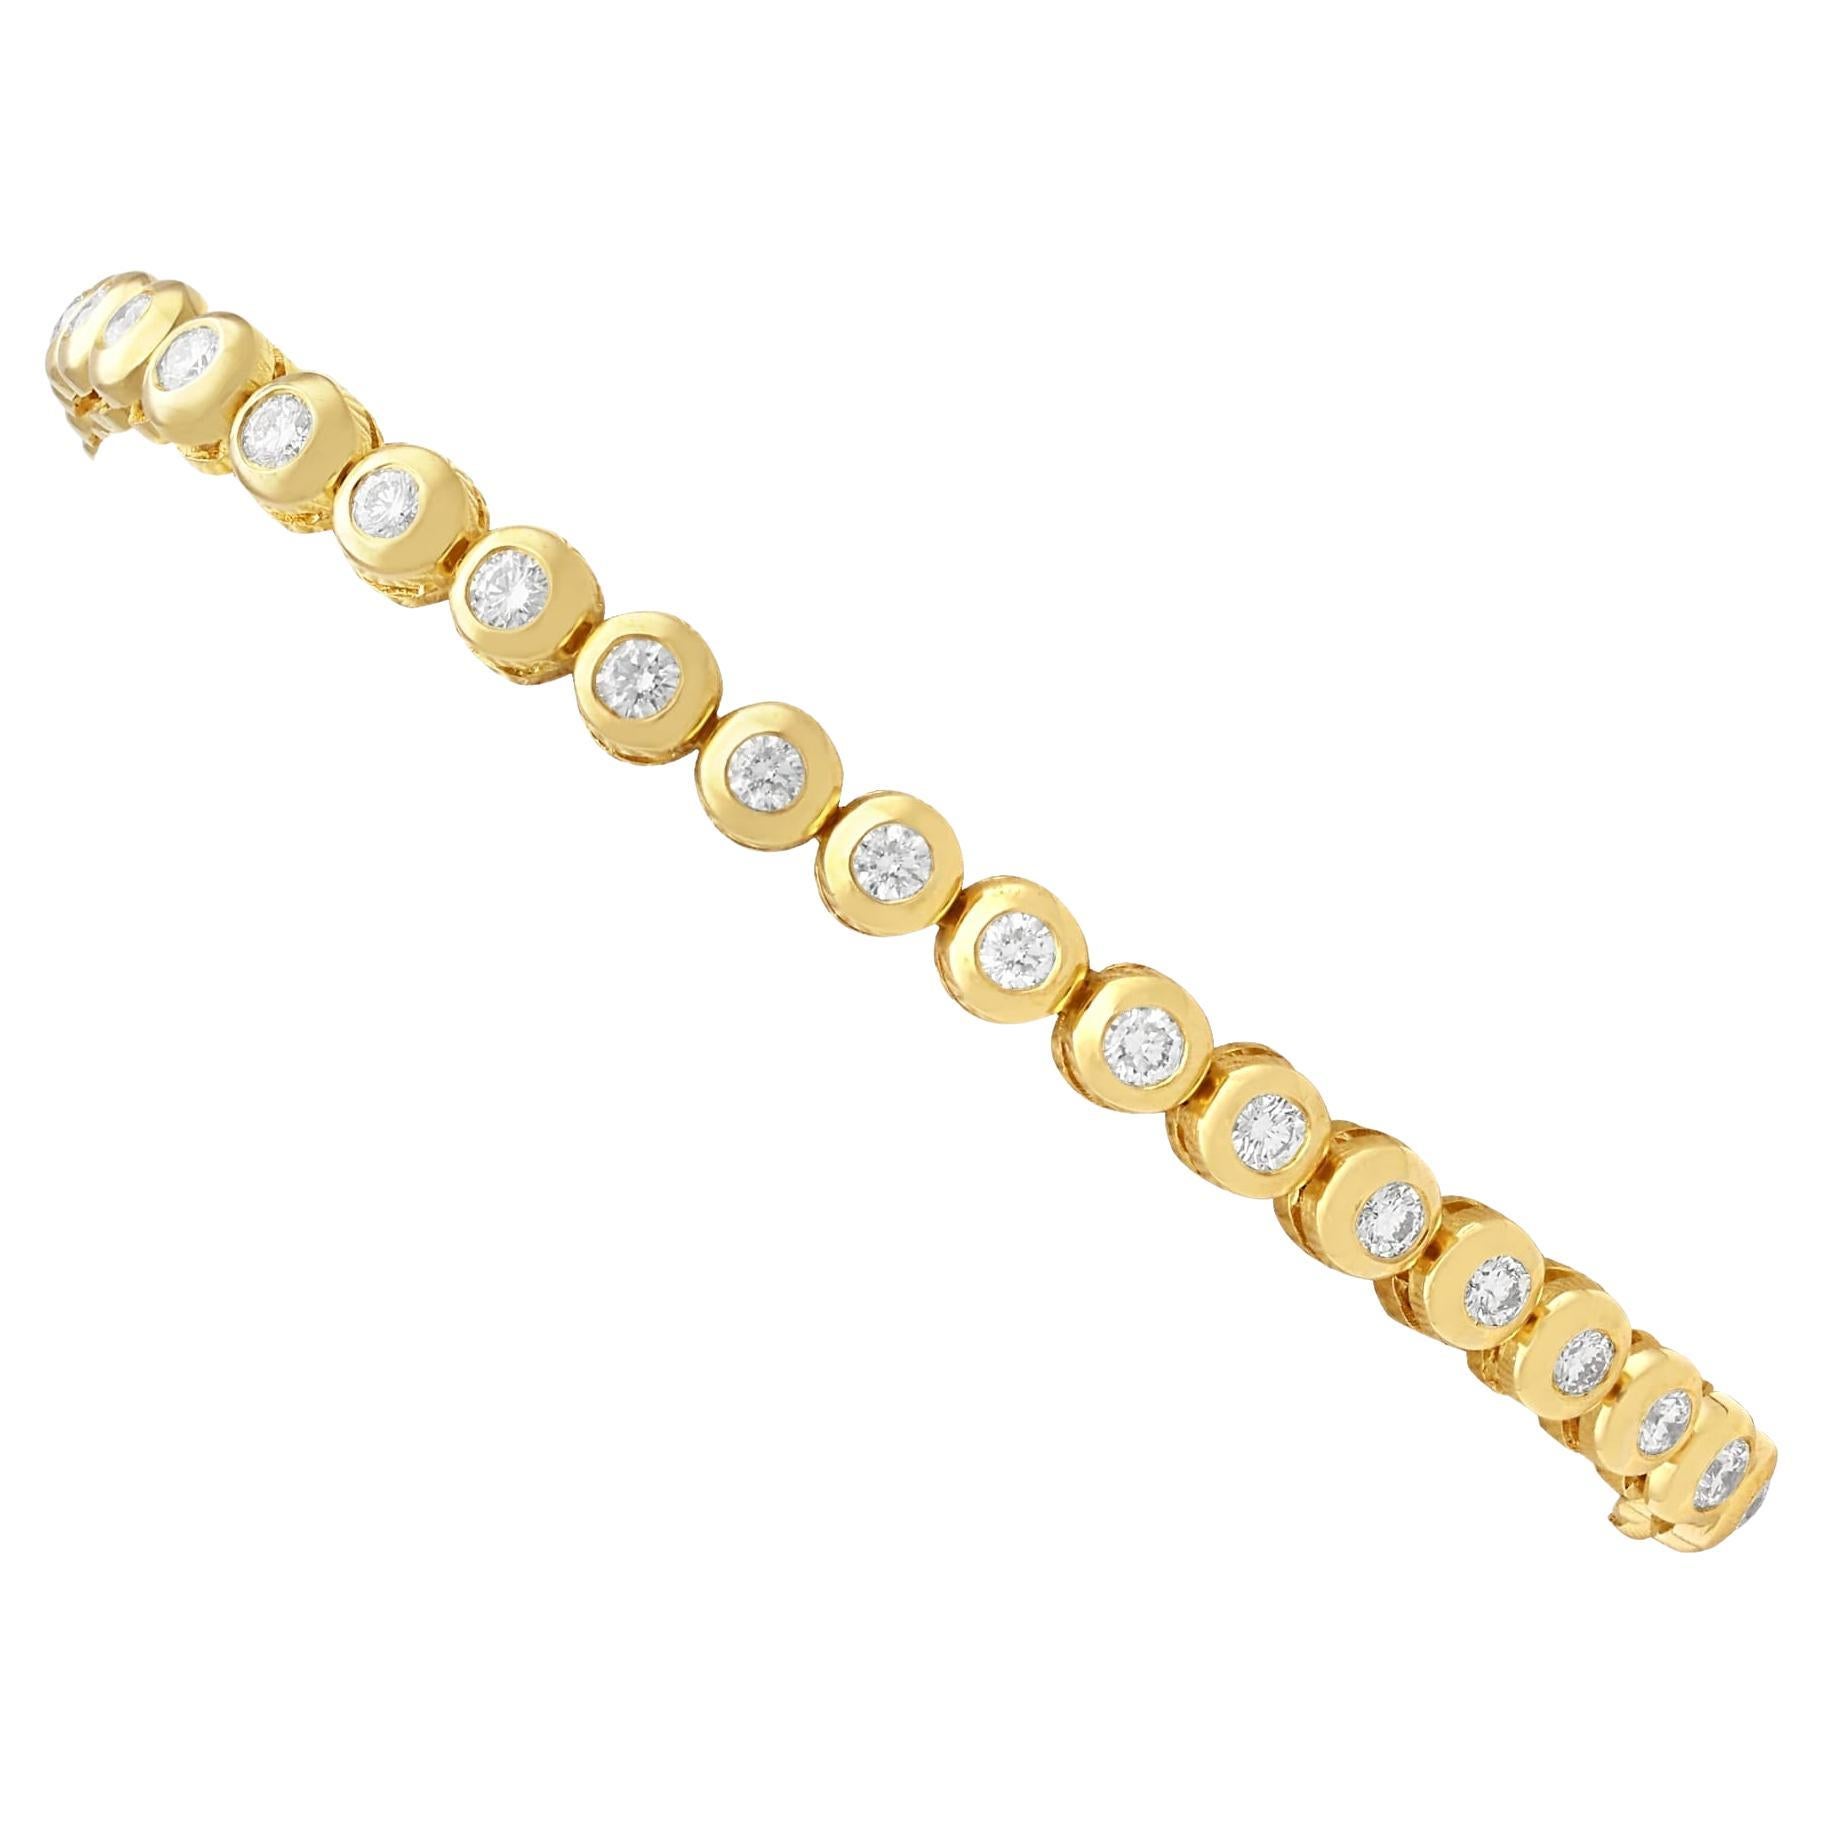 Vintage 2.25 Carat Diamond and 18k Yellow Gold Tennis Bracelet For Sale